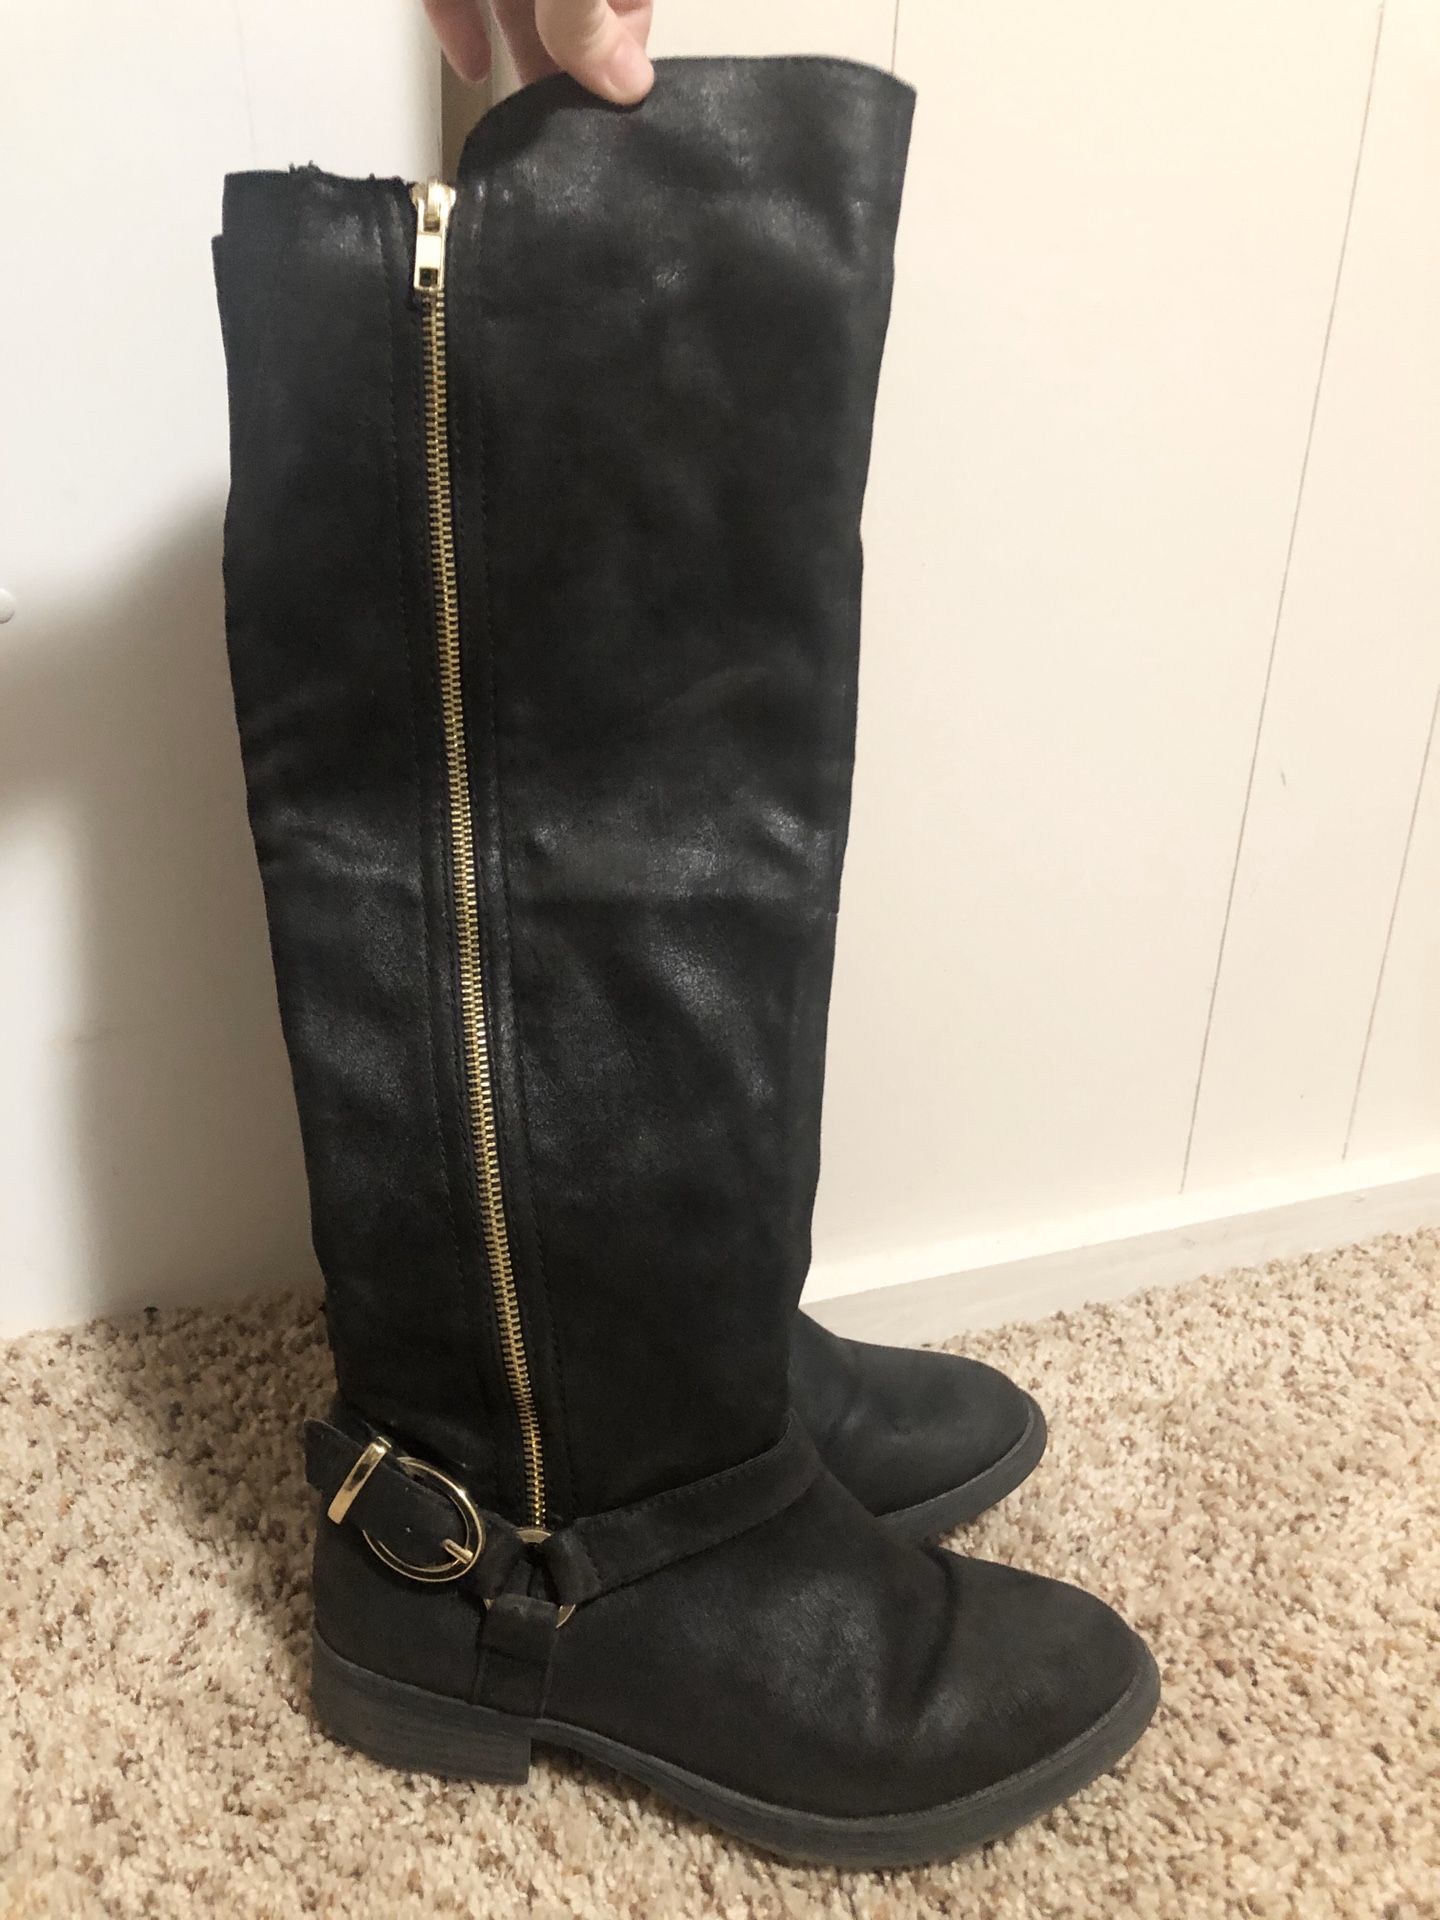 Black boots w/ Gold Zipper : Womens size 7